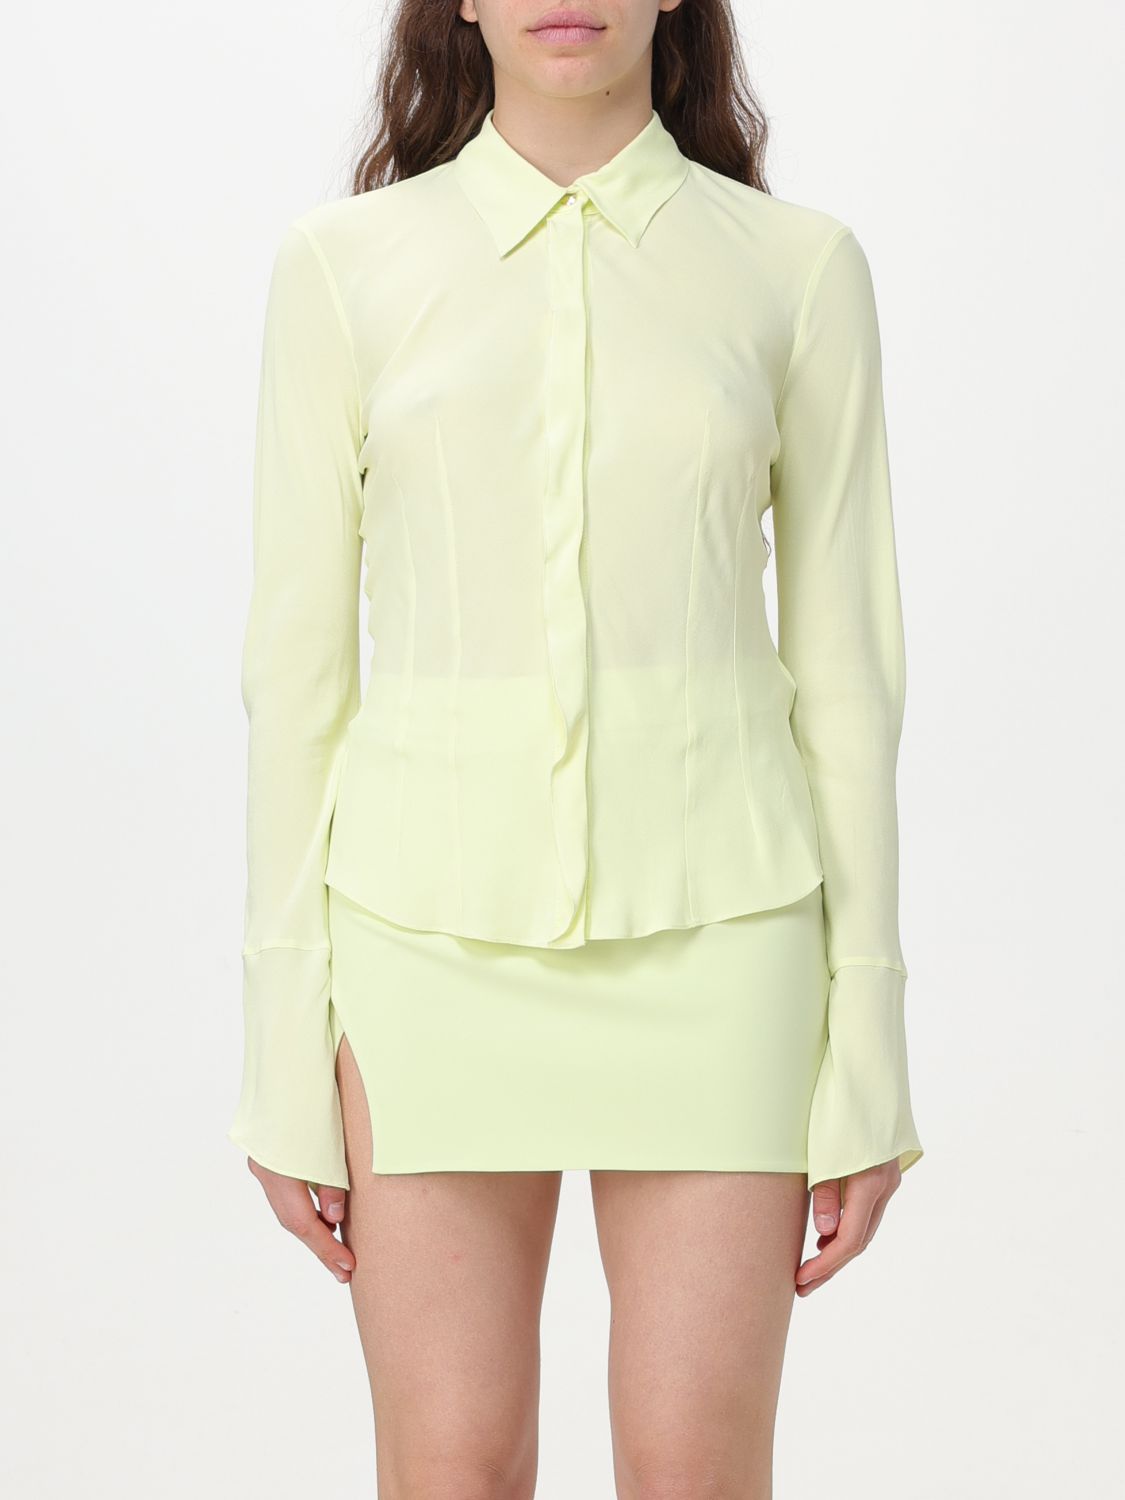 Patrizia Pepe Shirt  Woman Color Lime